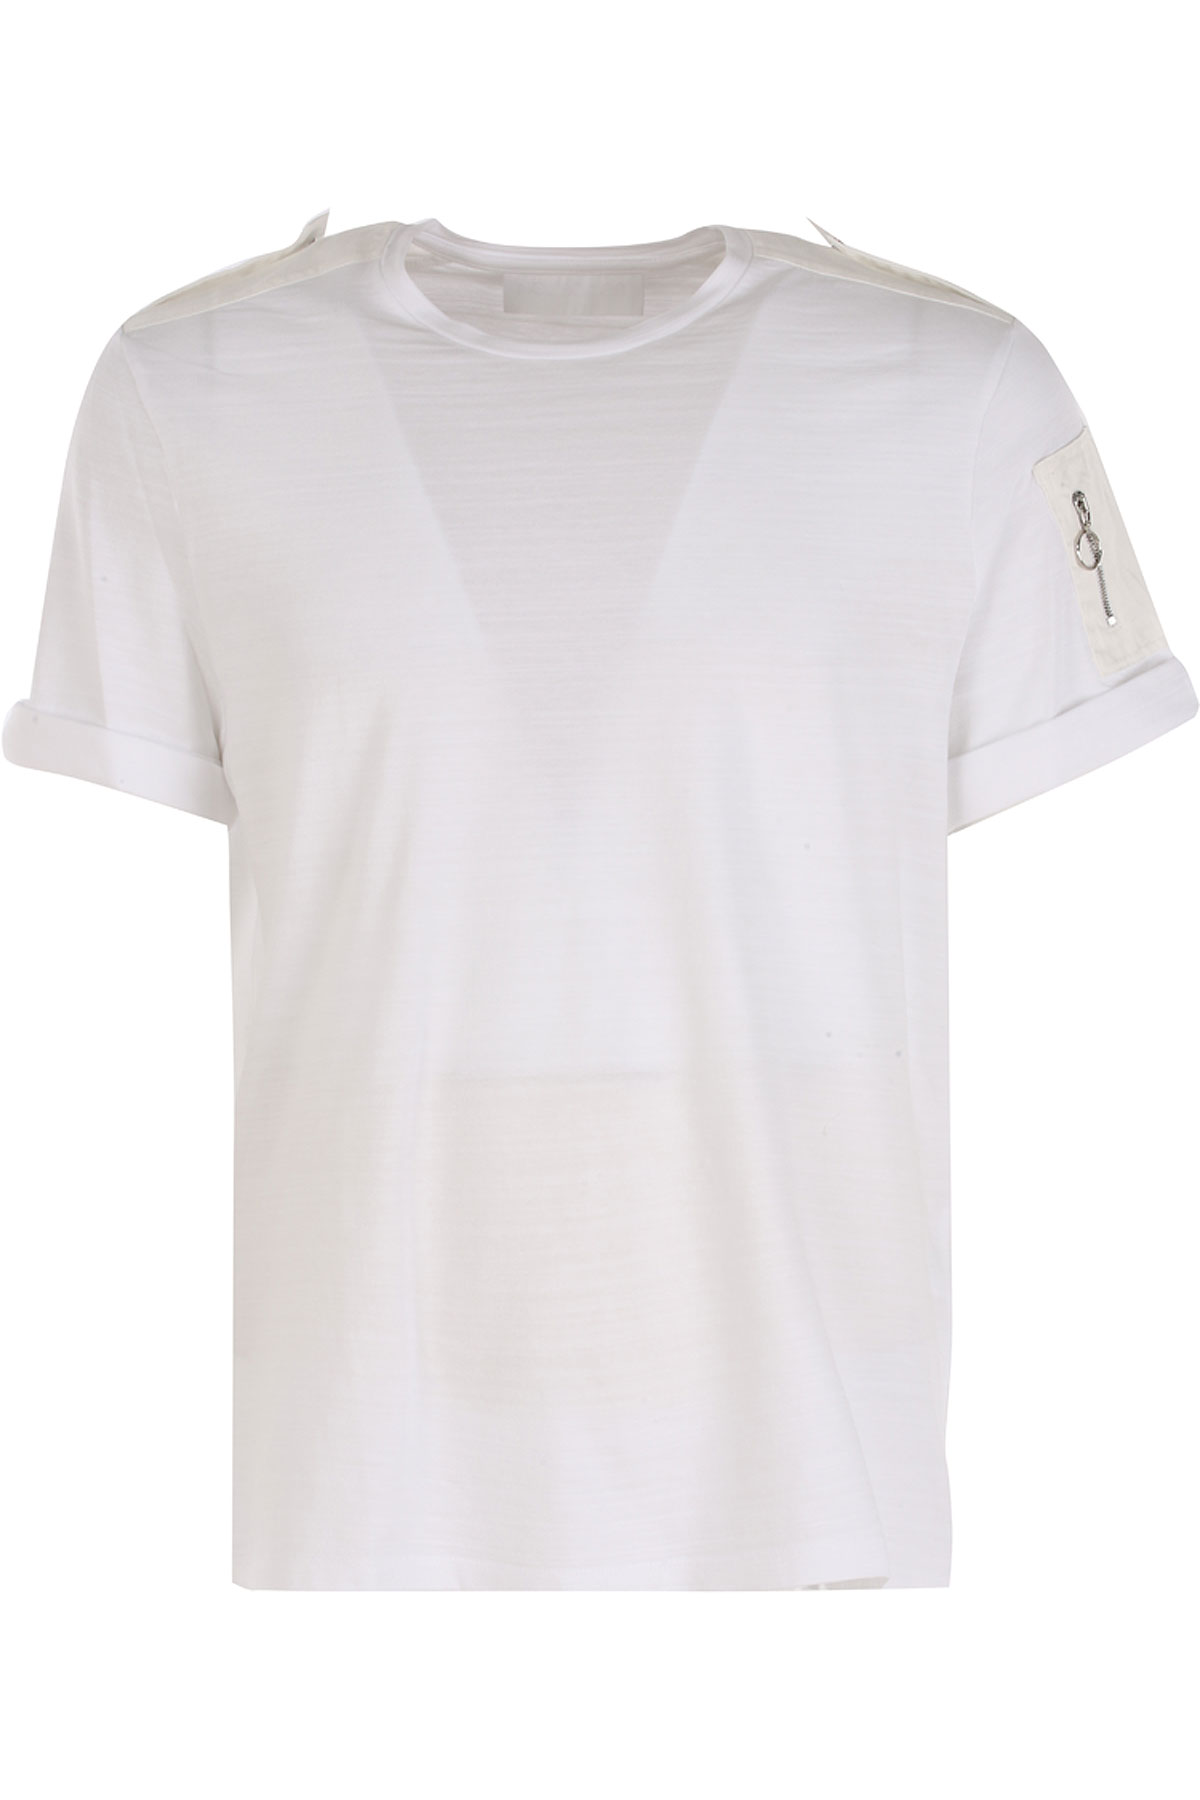 Neil Barrett T-shirt Homme , Blanc, Coton, 2017, L M S XL